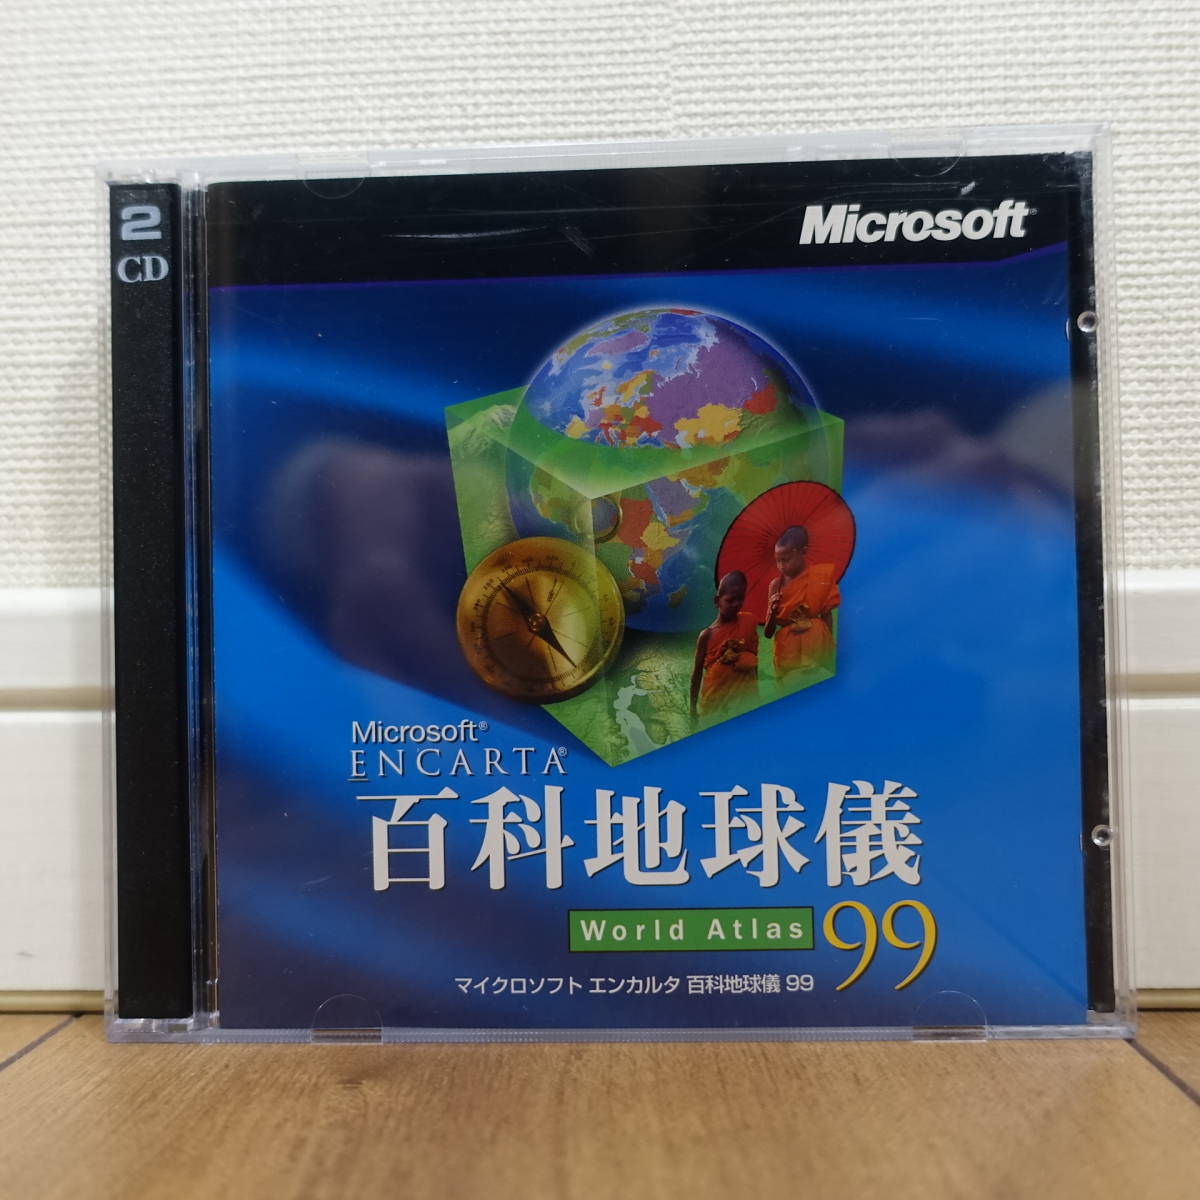 Microsoft ENCARTA World Atlas 99 Microsoft en cards various subjects globe 99